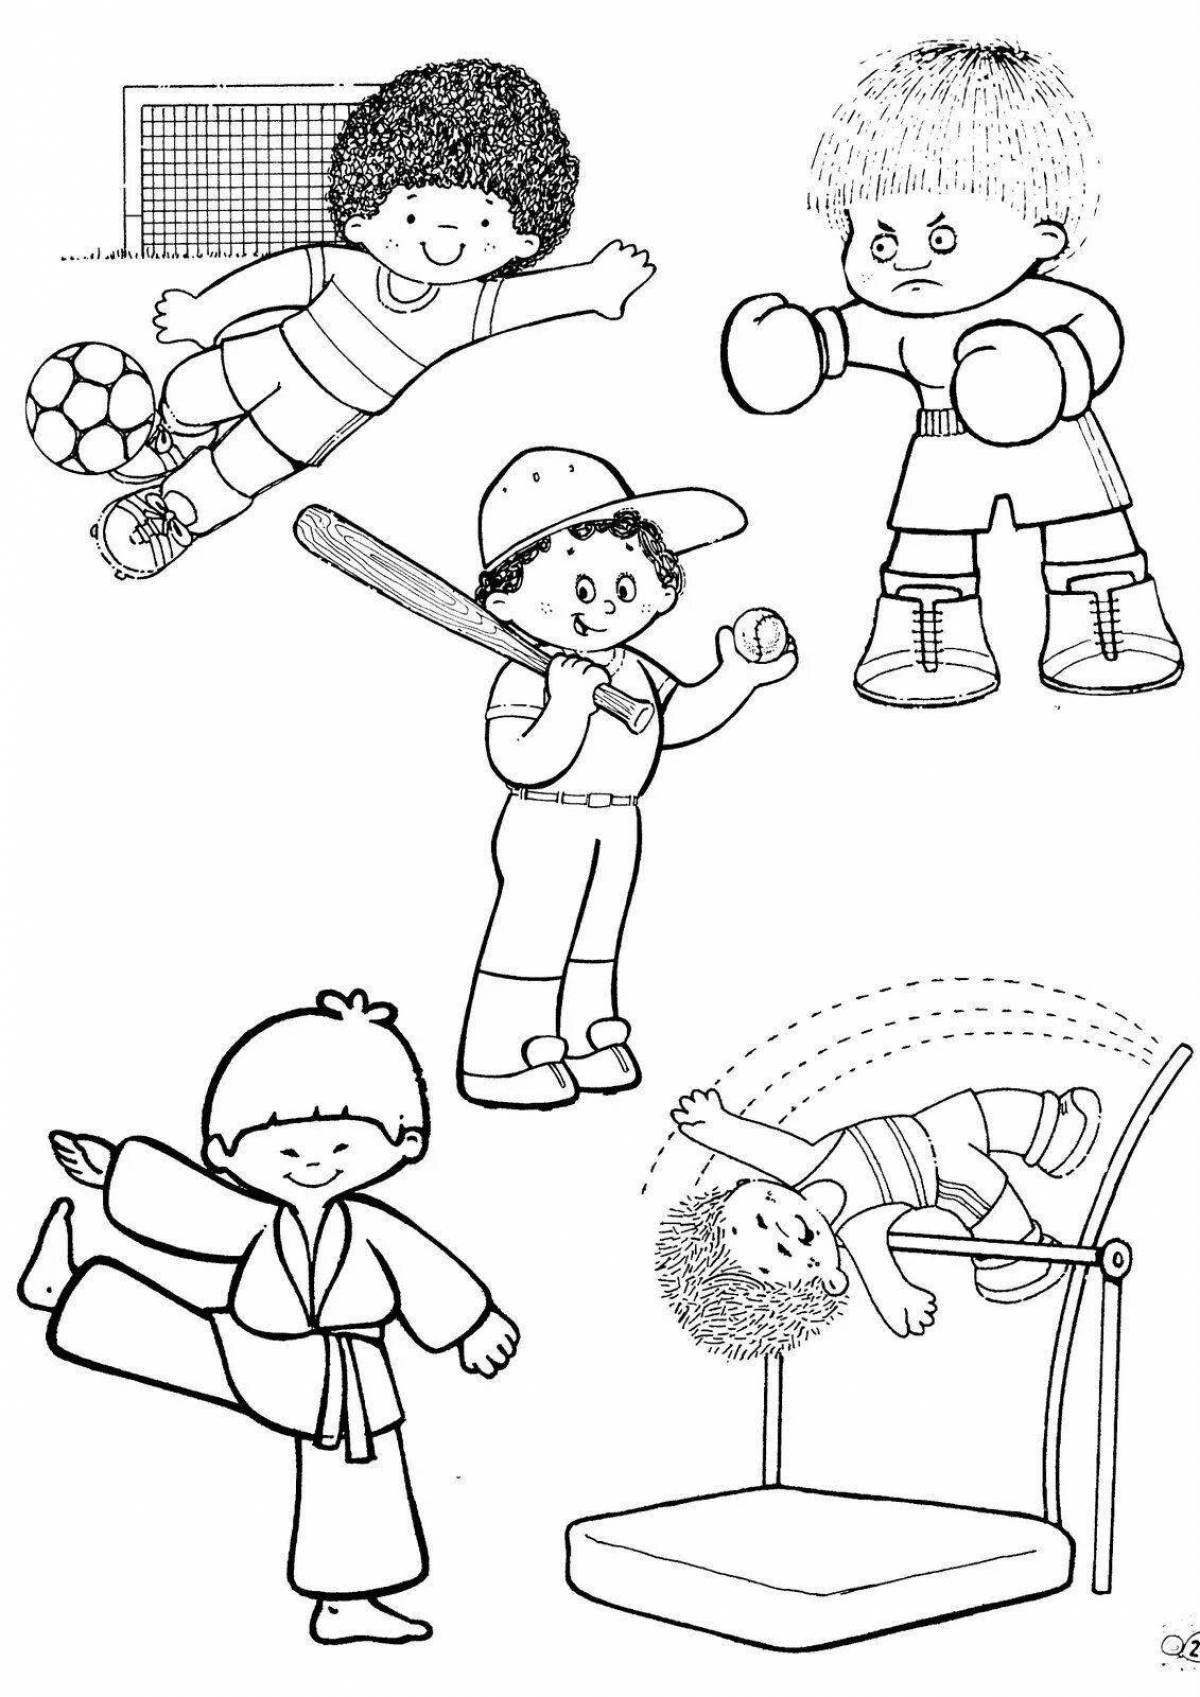 Preschool sports #3